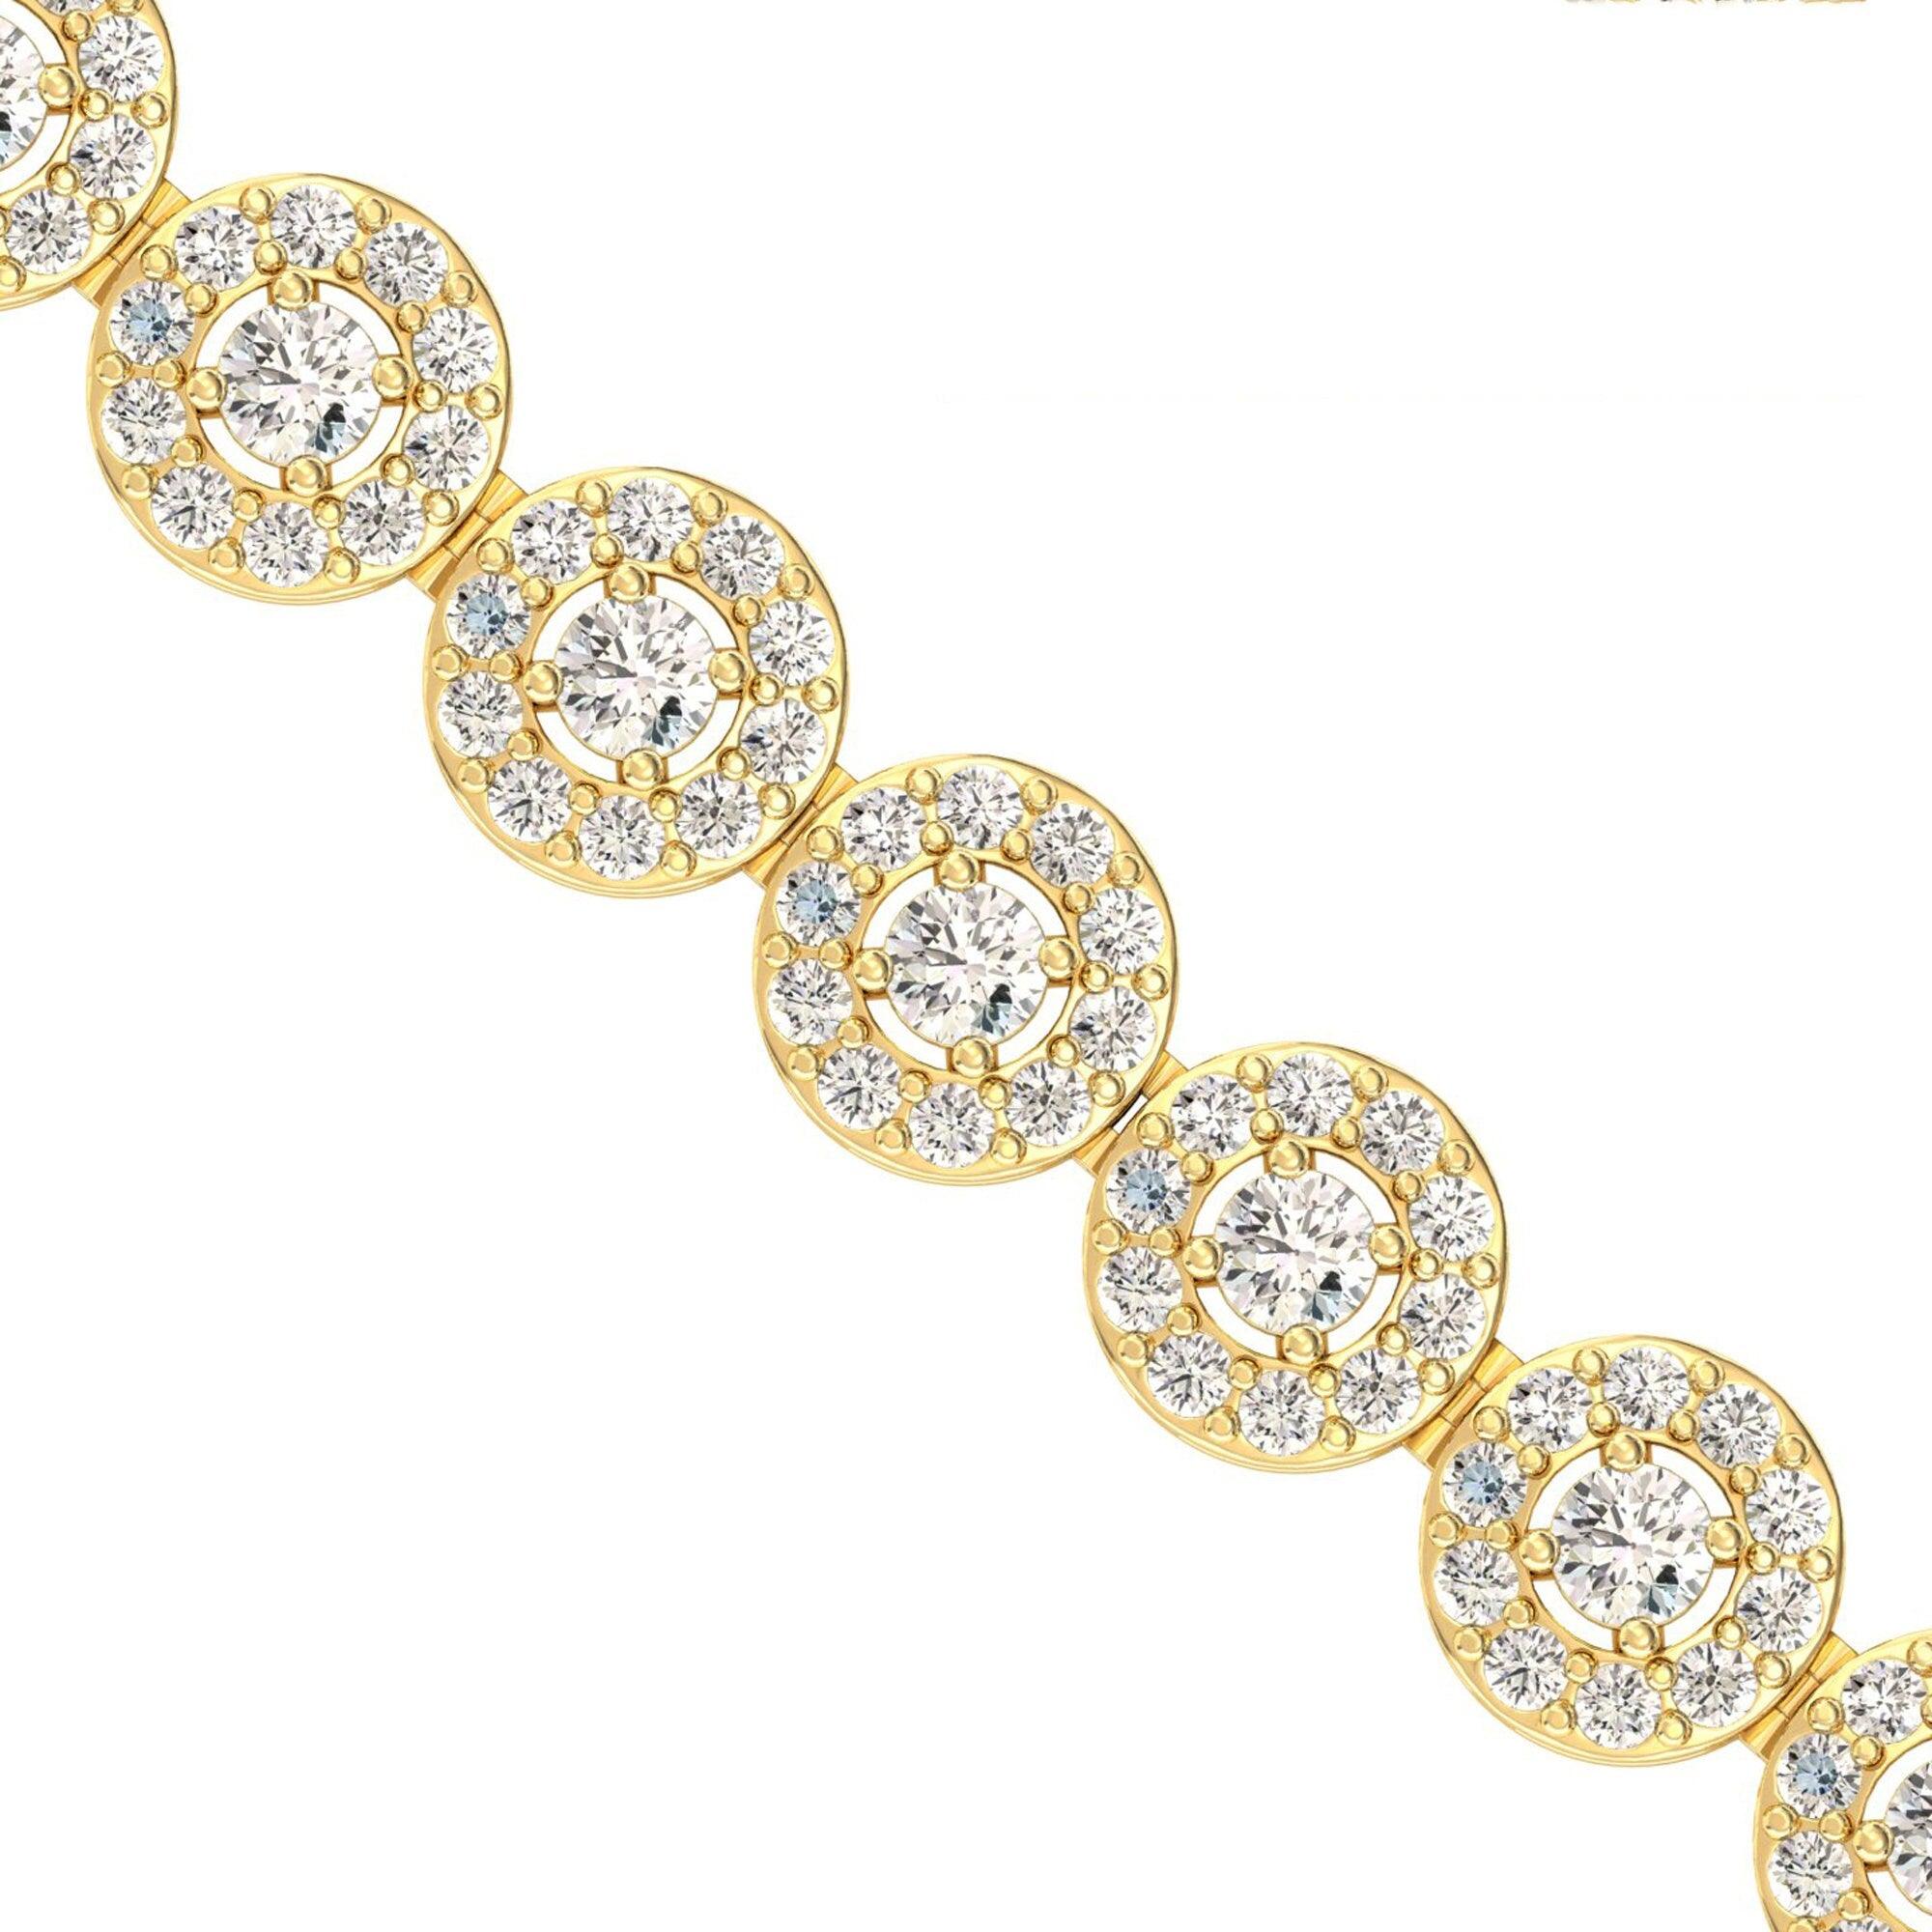 Natural Diamond Custom Cut Bracelet, Yellow/White Gold Bracelet, Rose Gold Unique Bracelet - GeumJewels